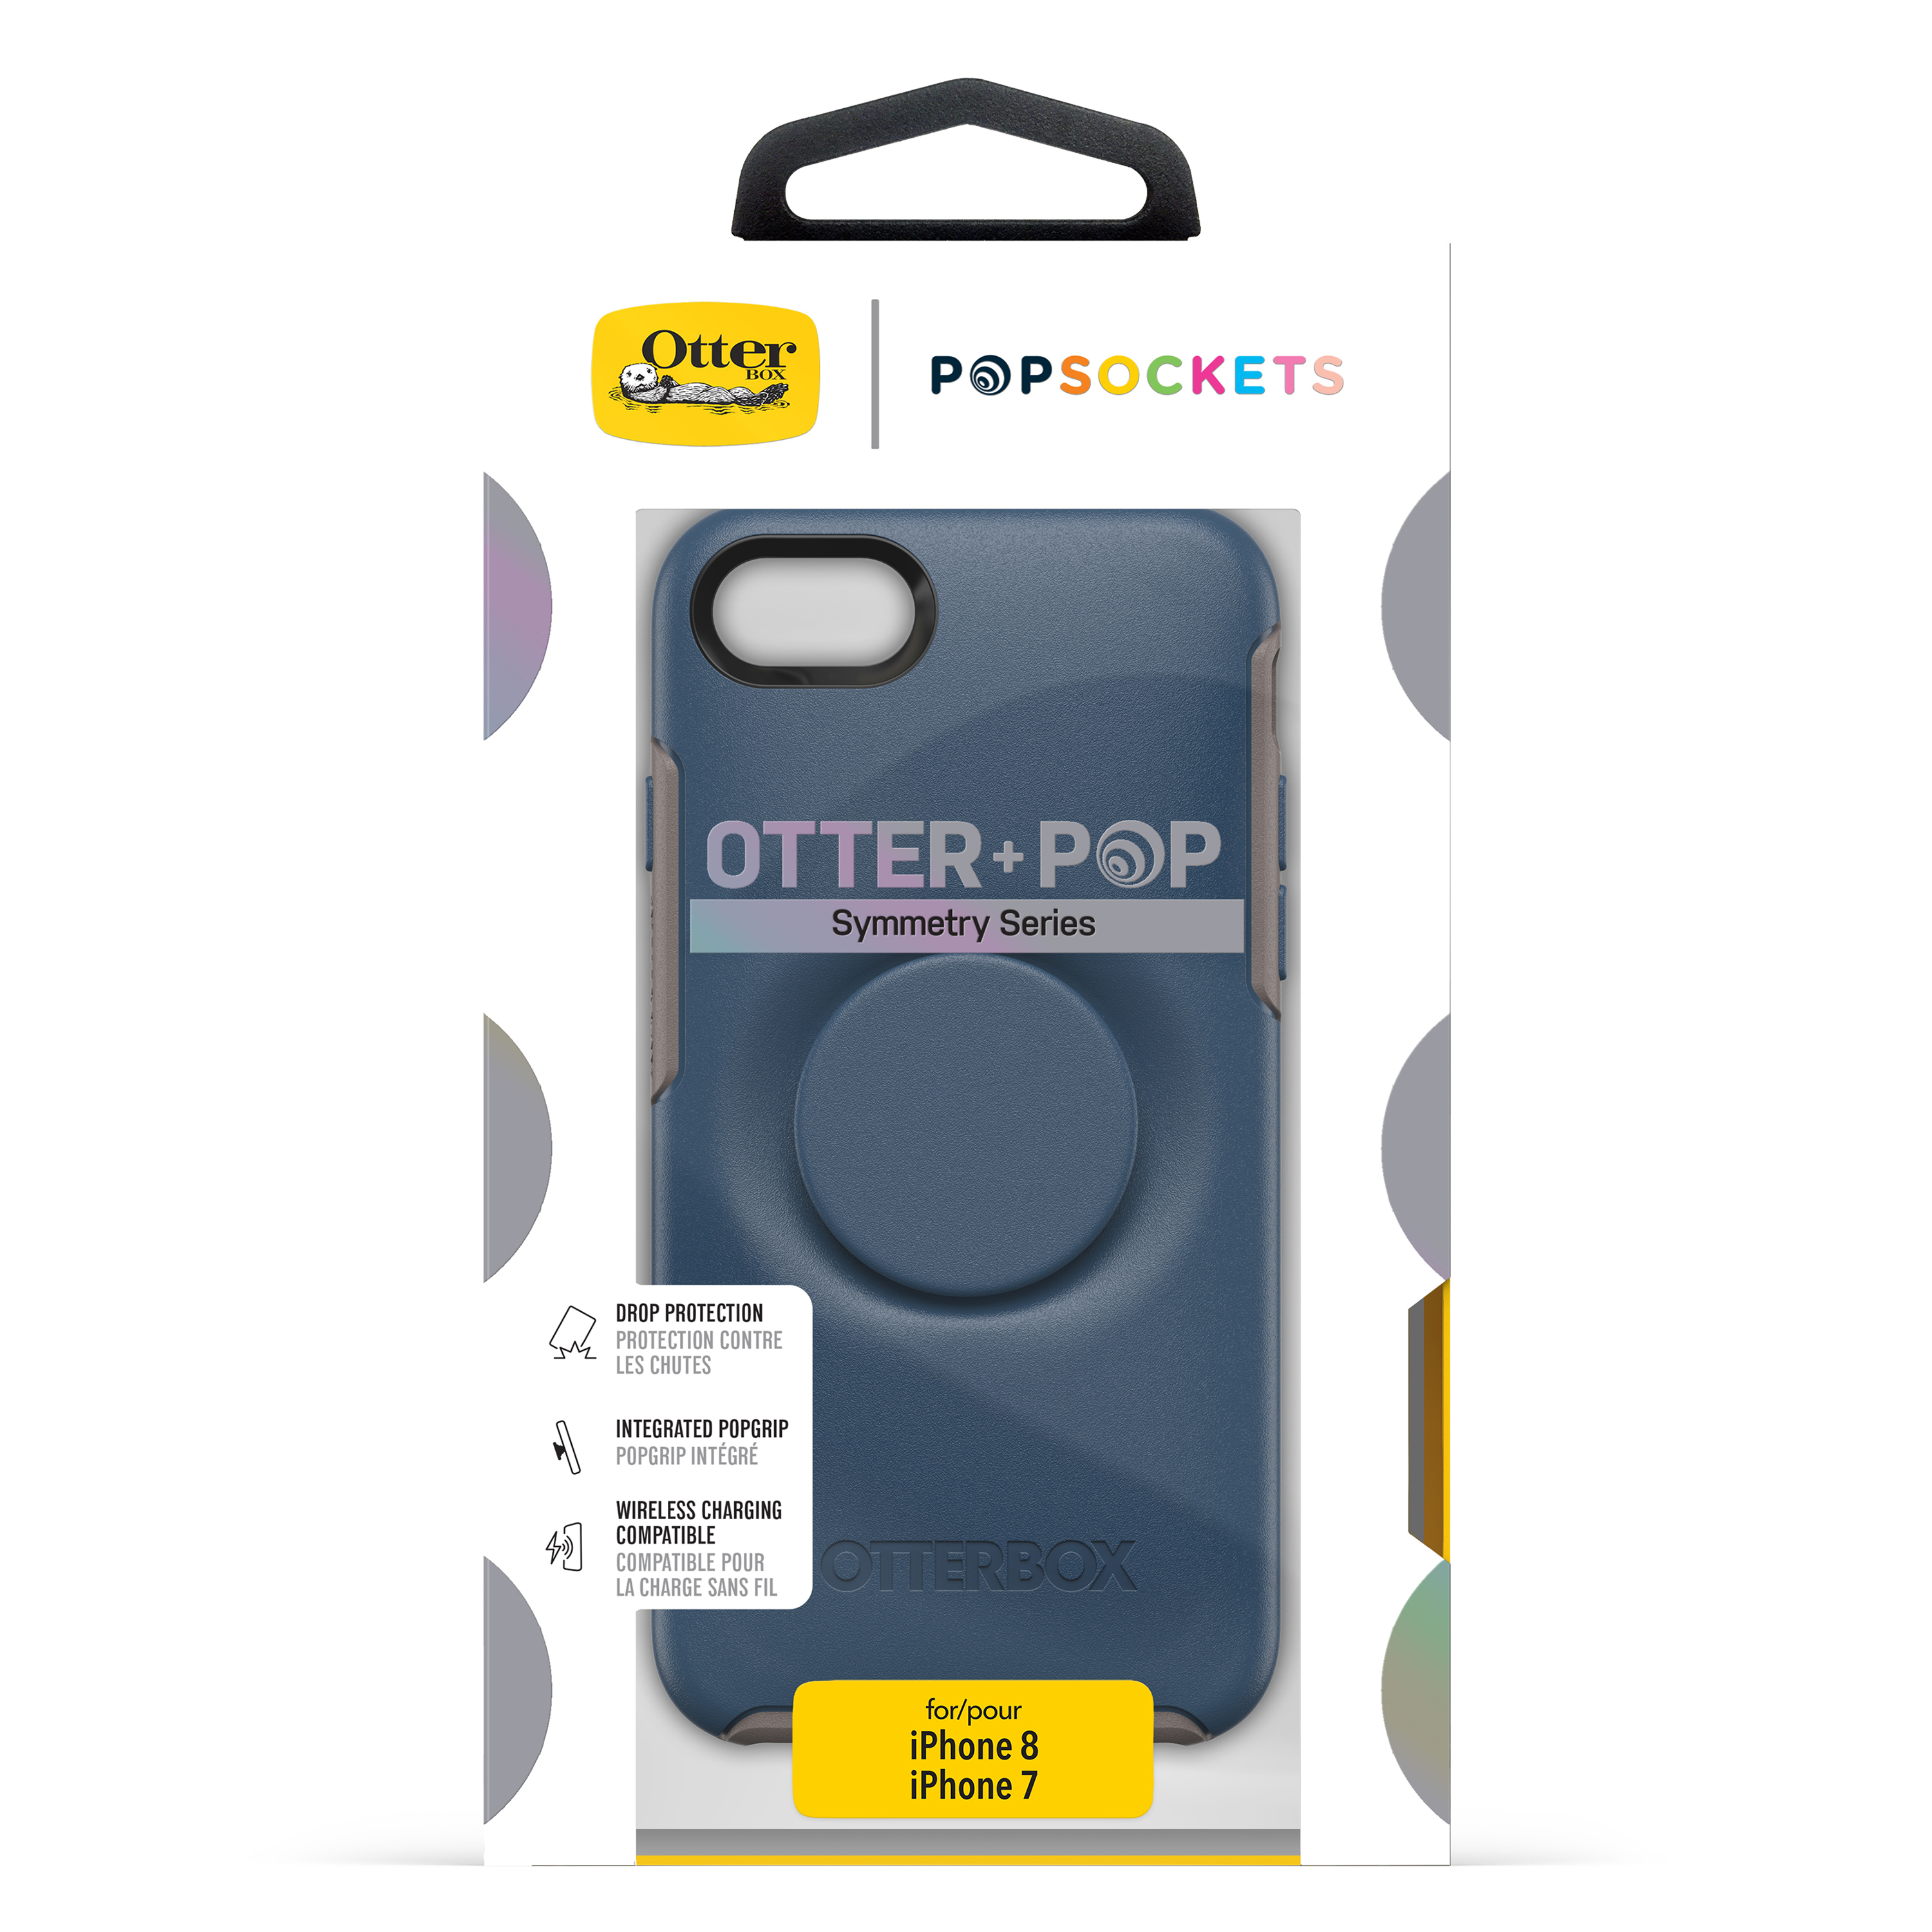 OTTERBOX Otter + Pop Symmetry, 8, iPhone iPhone 7, Blau Apple, Backcover